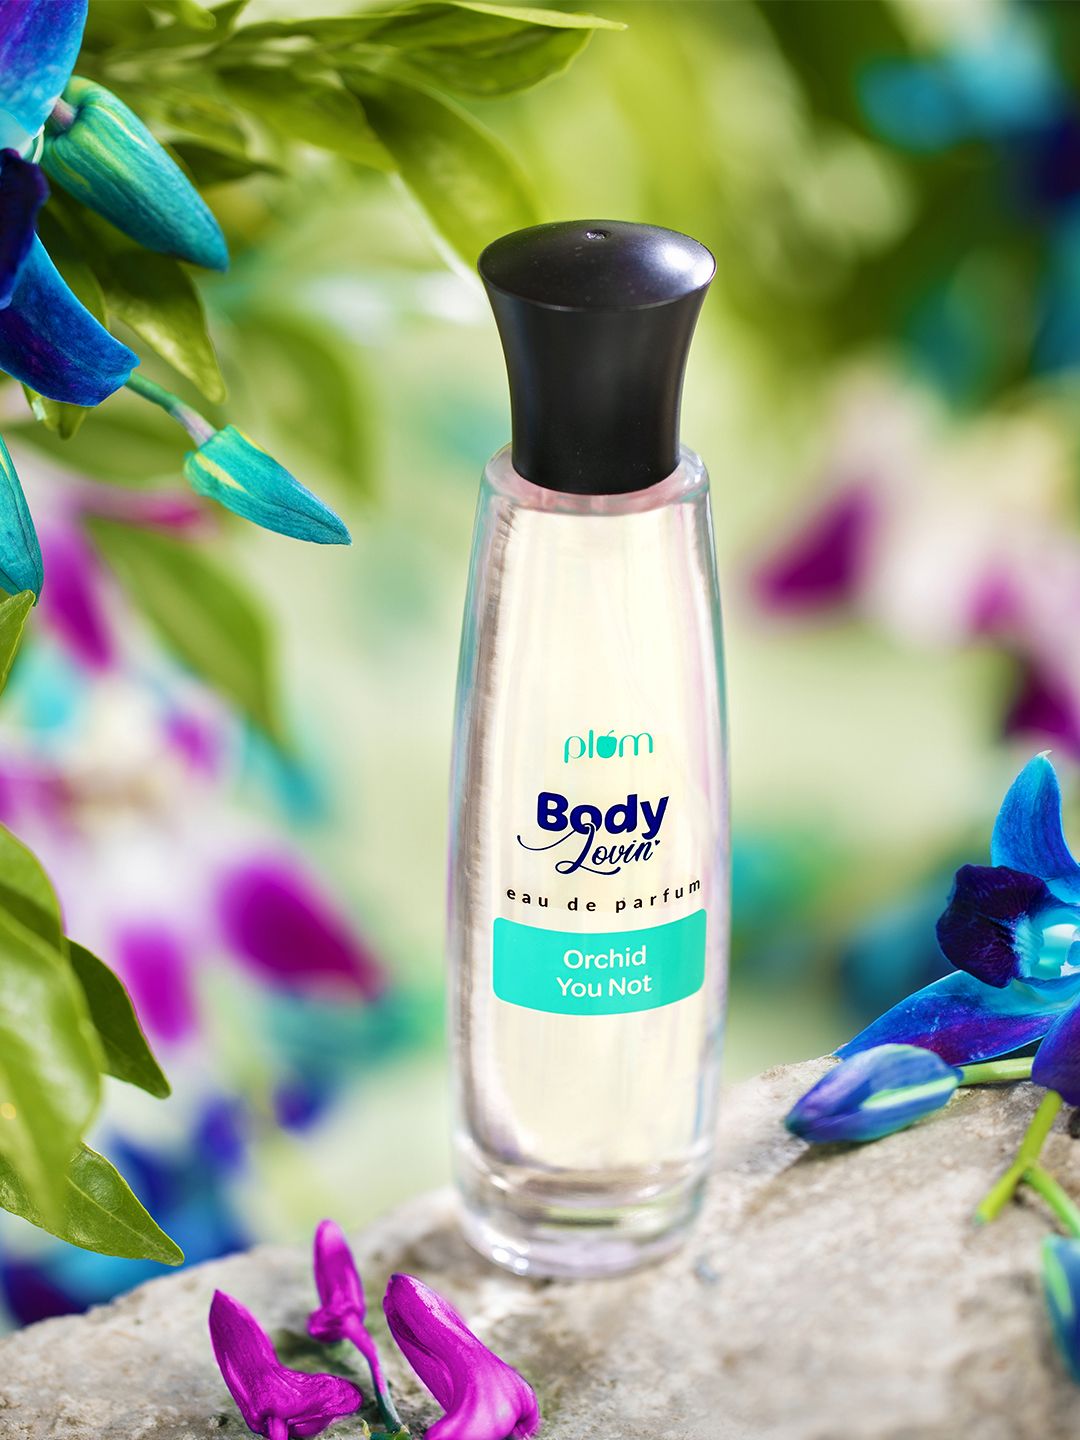 Plum BodyLovin' Orchid You Not Eau De Parfum - 50 ml Price in India